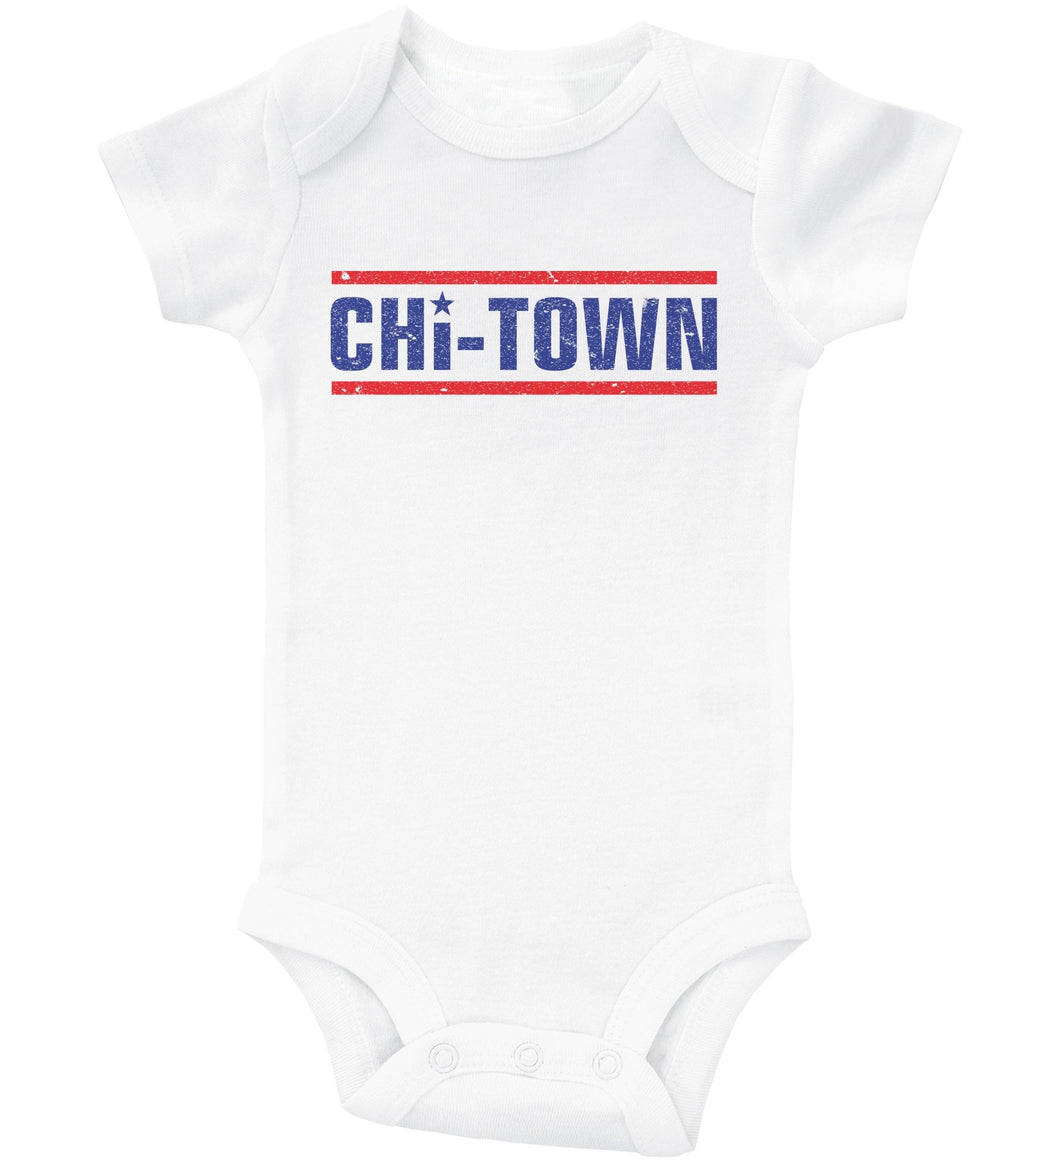 CHI-TOWN / Chicago Baby Onesie - Baffle